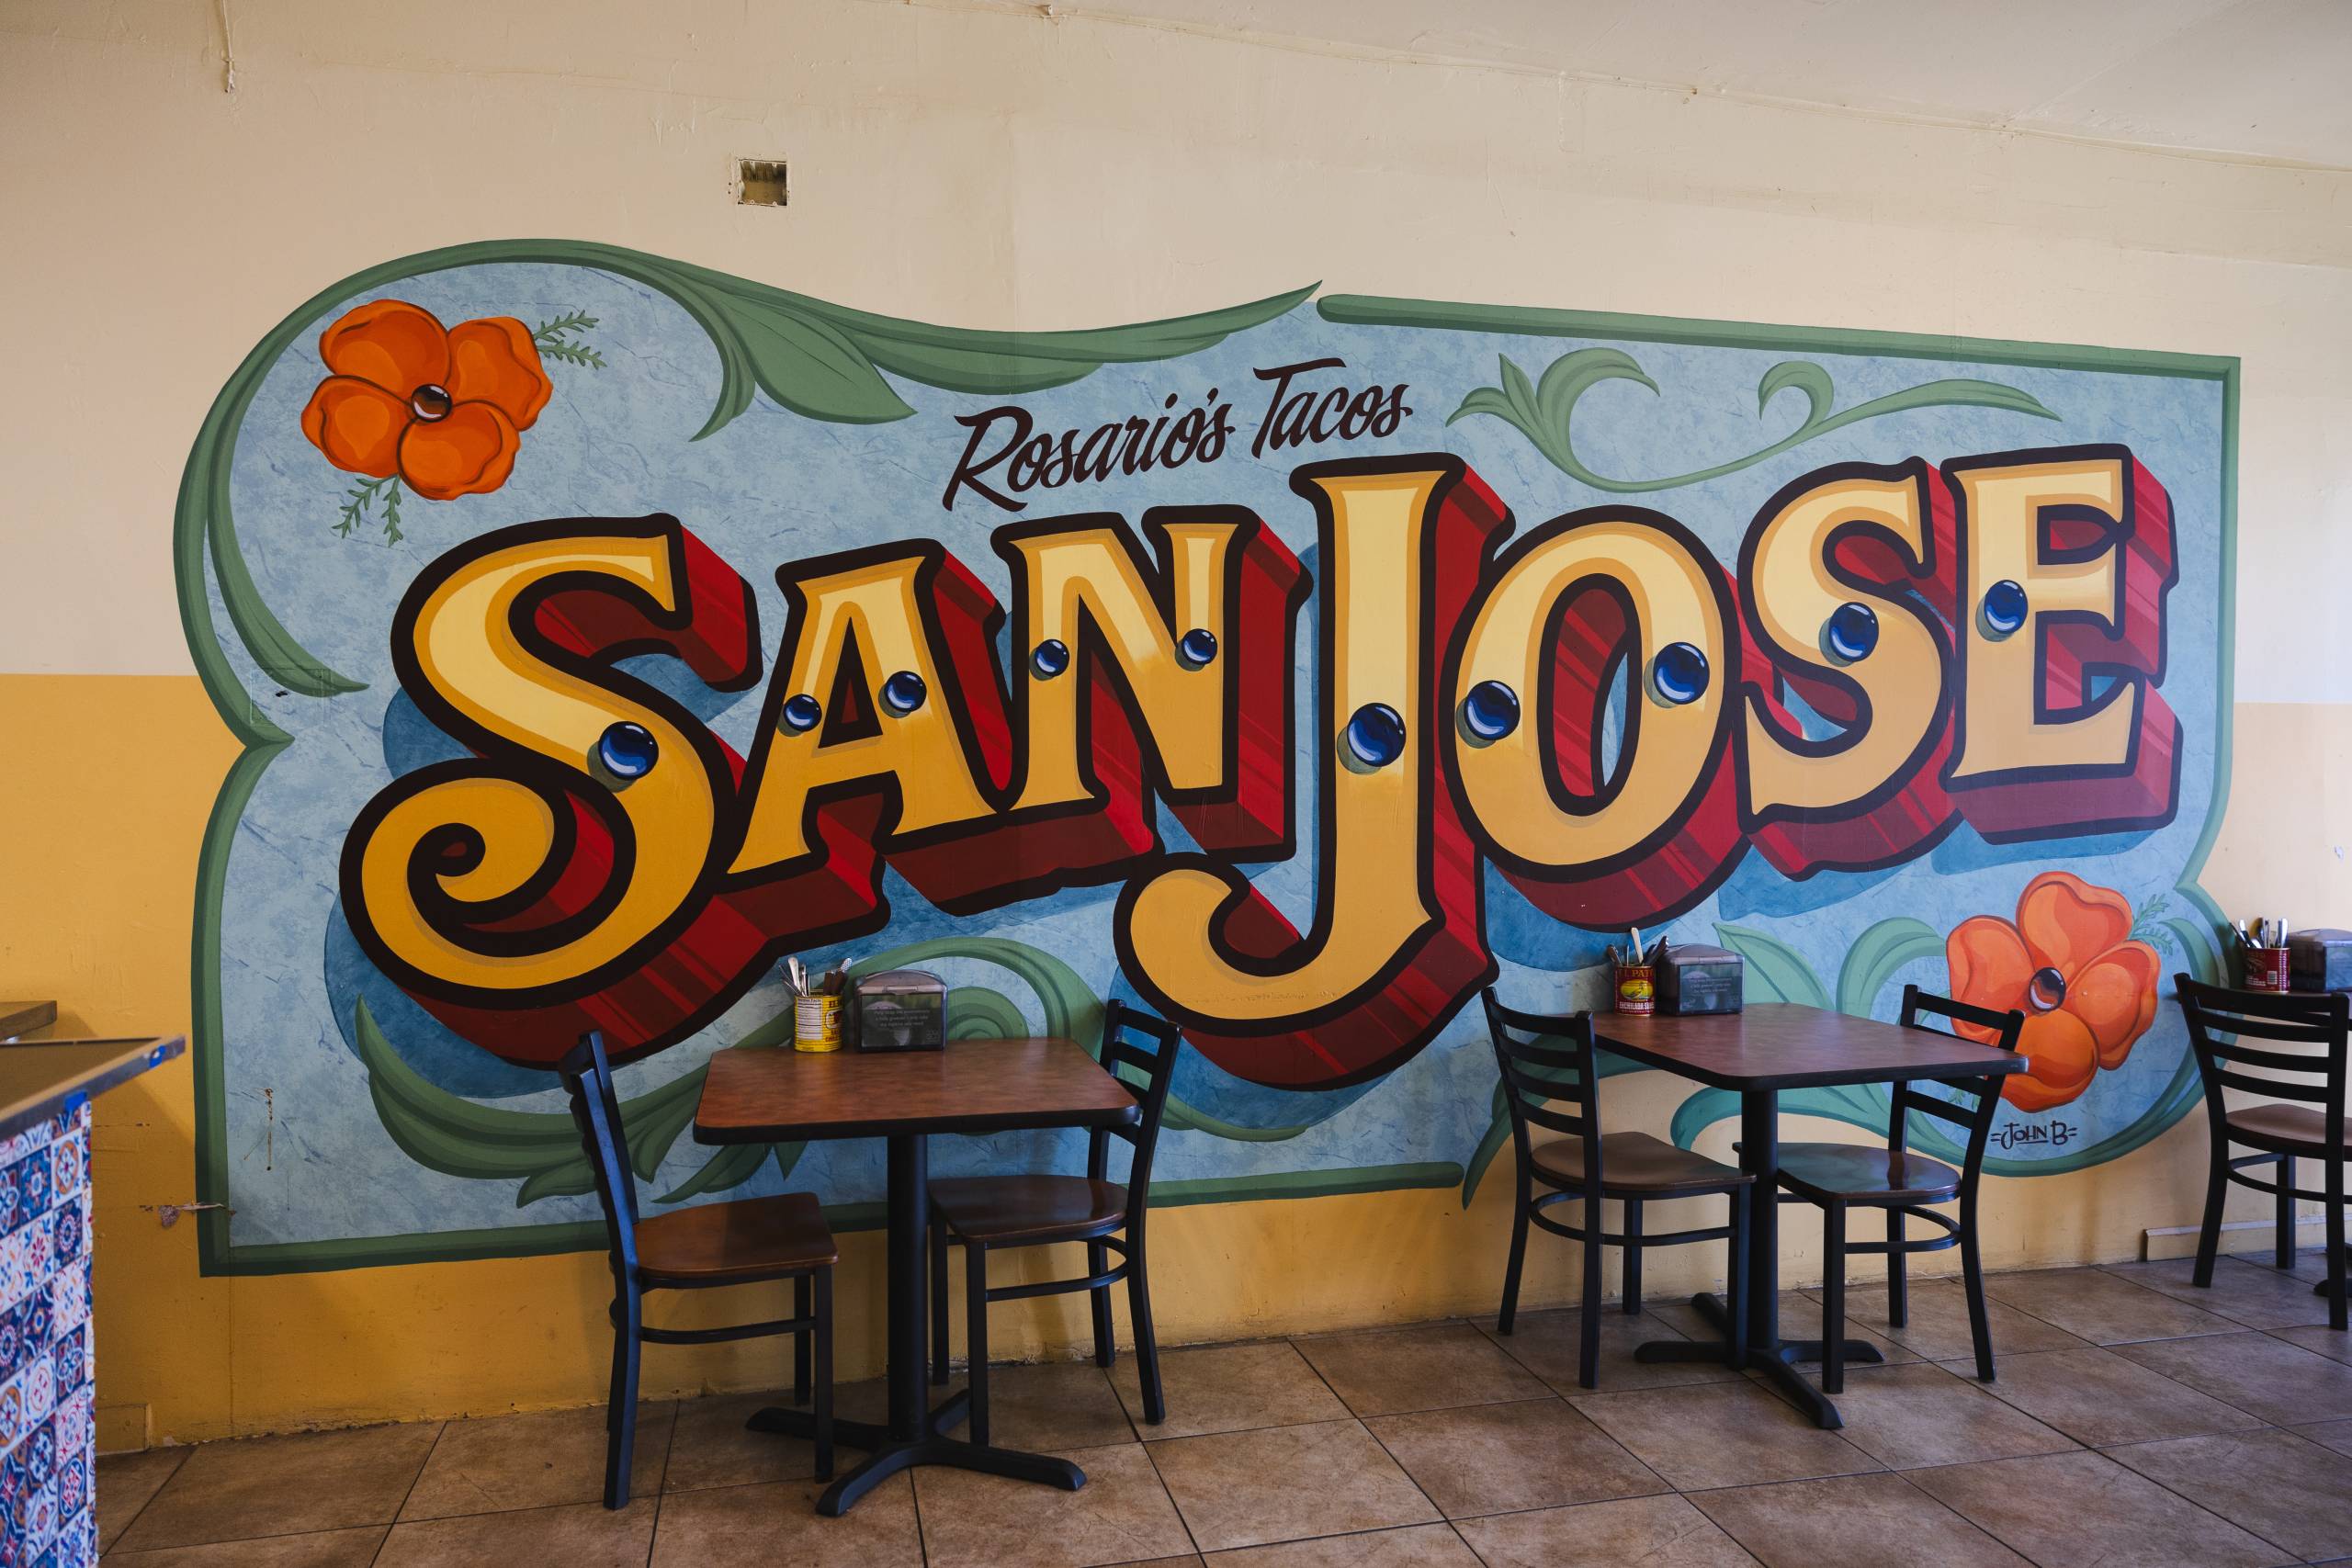 a mural that reads "Rosario's Tacos San Jose" inside a taqueria